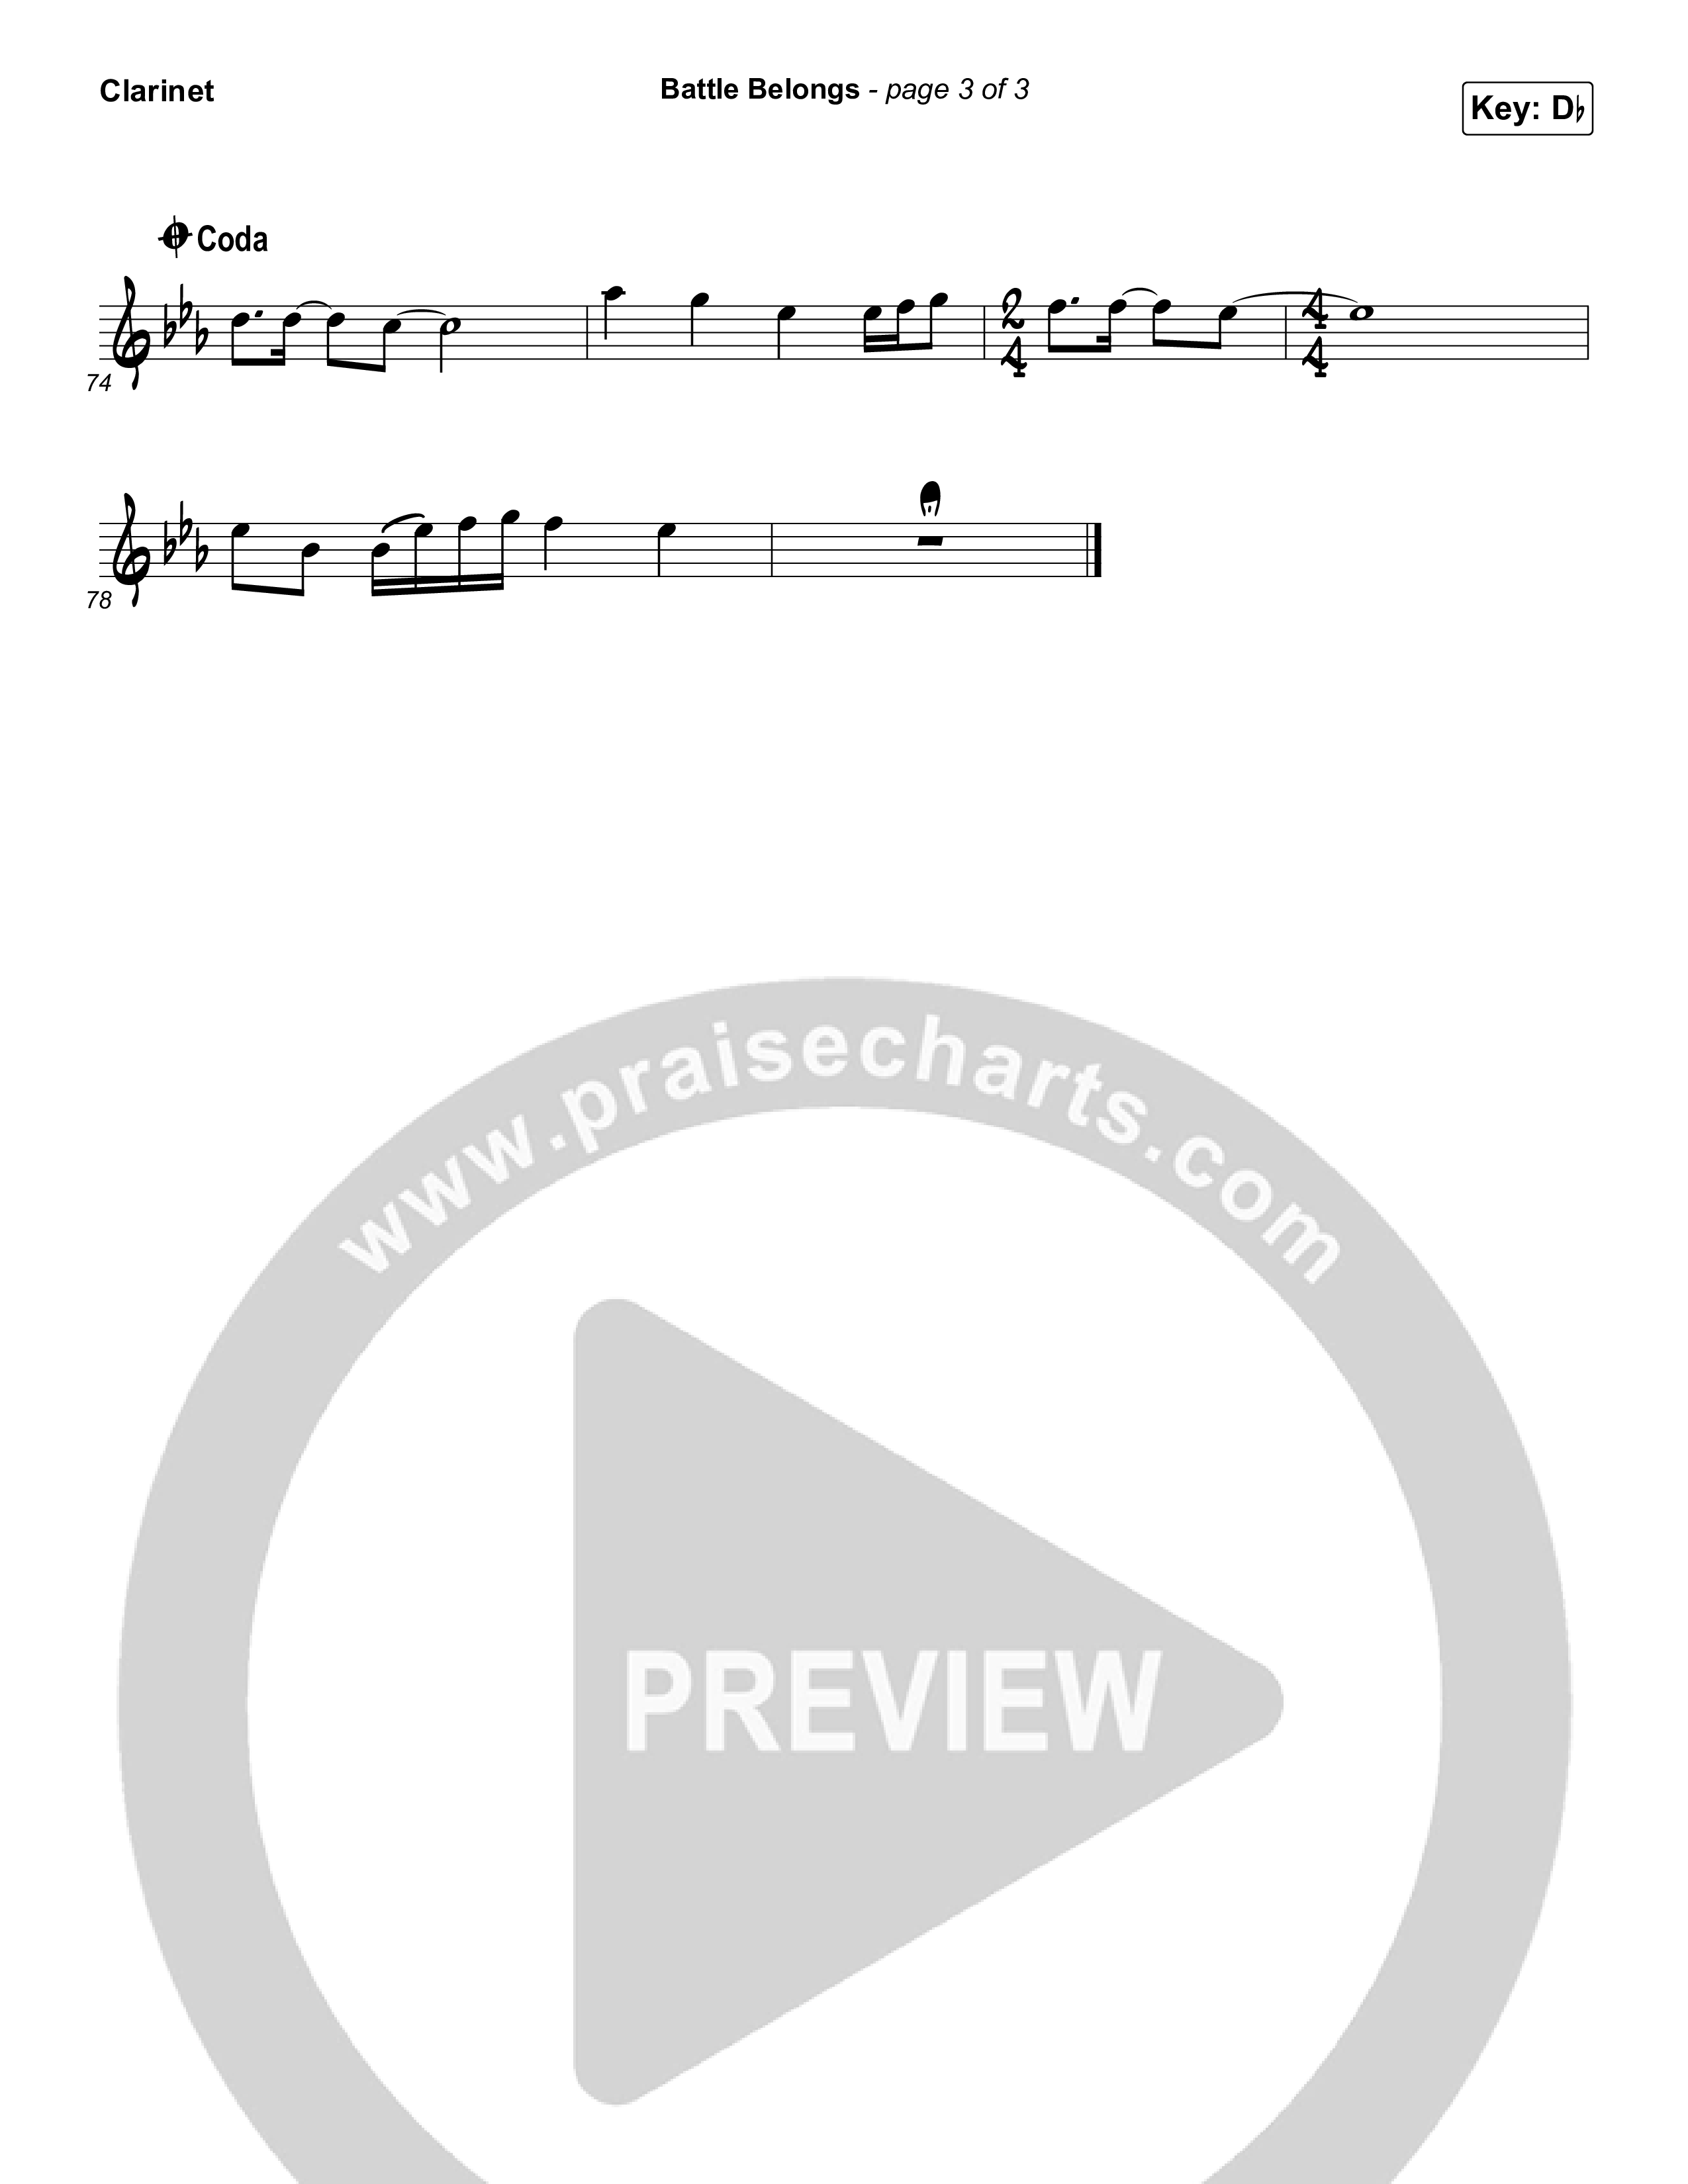 Battle Belongs (Choral Anthem SATB) Clarinet (Phil Wickham / Arr. Luke Gambill)